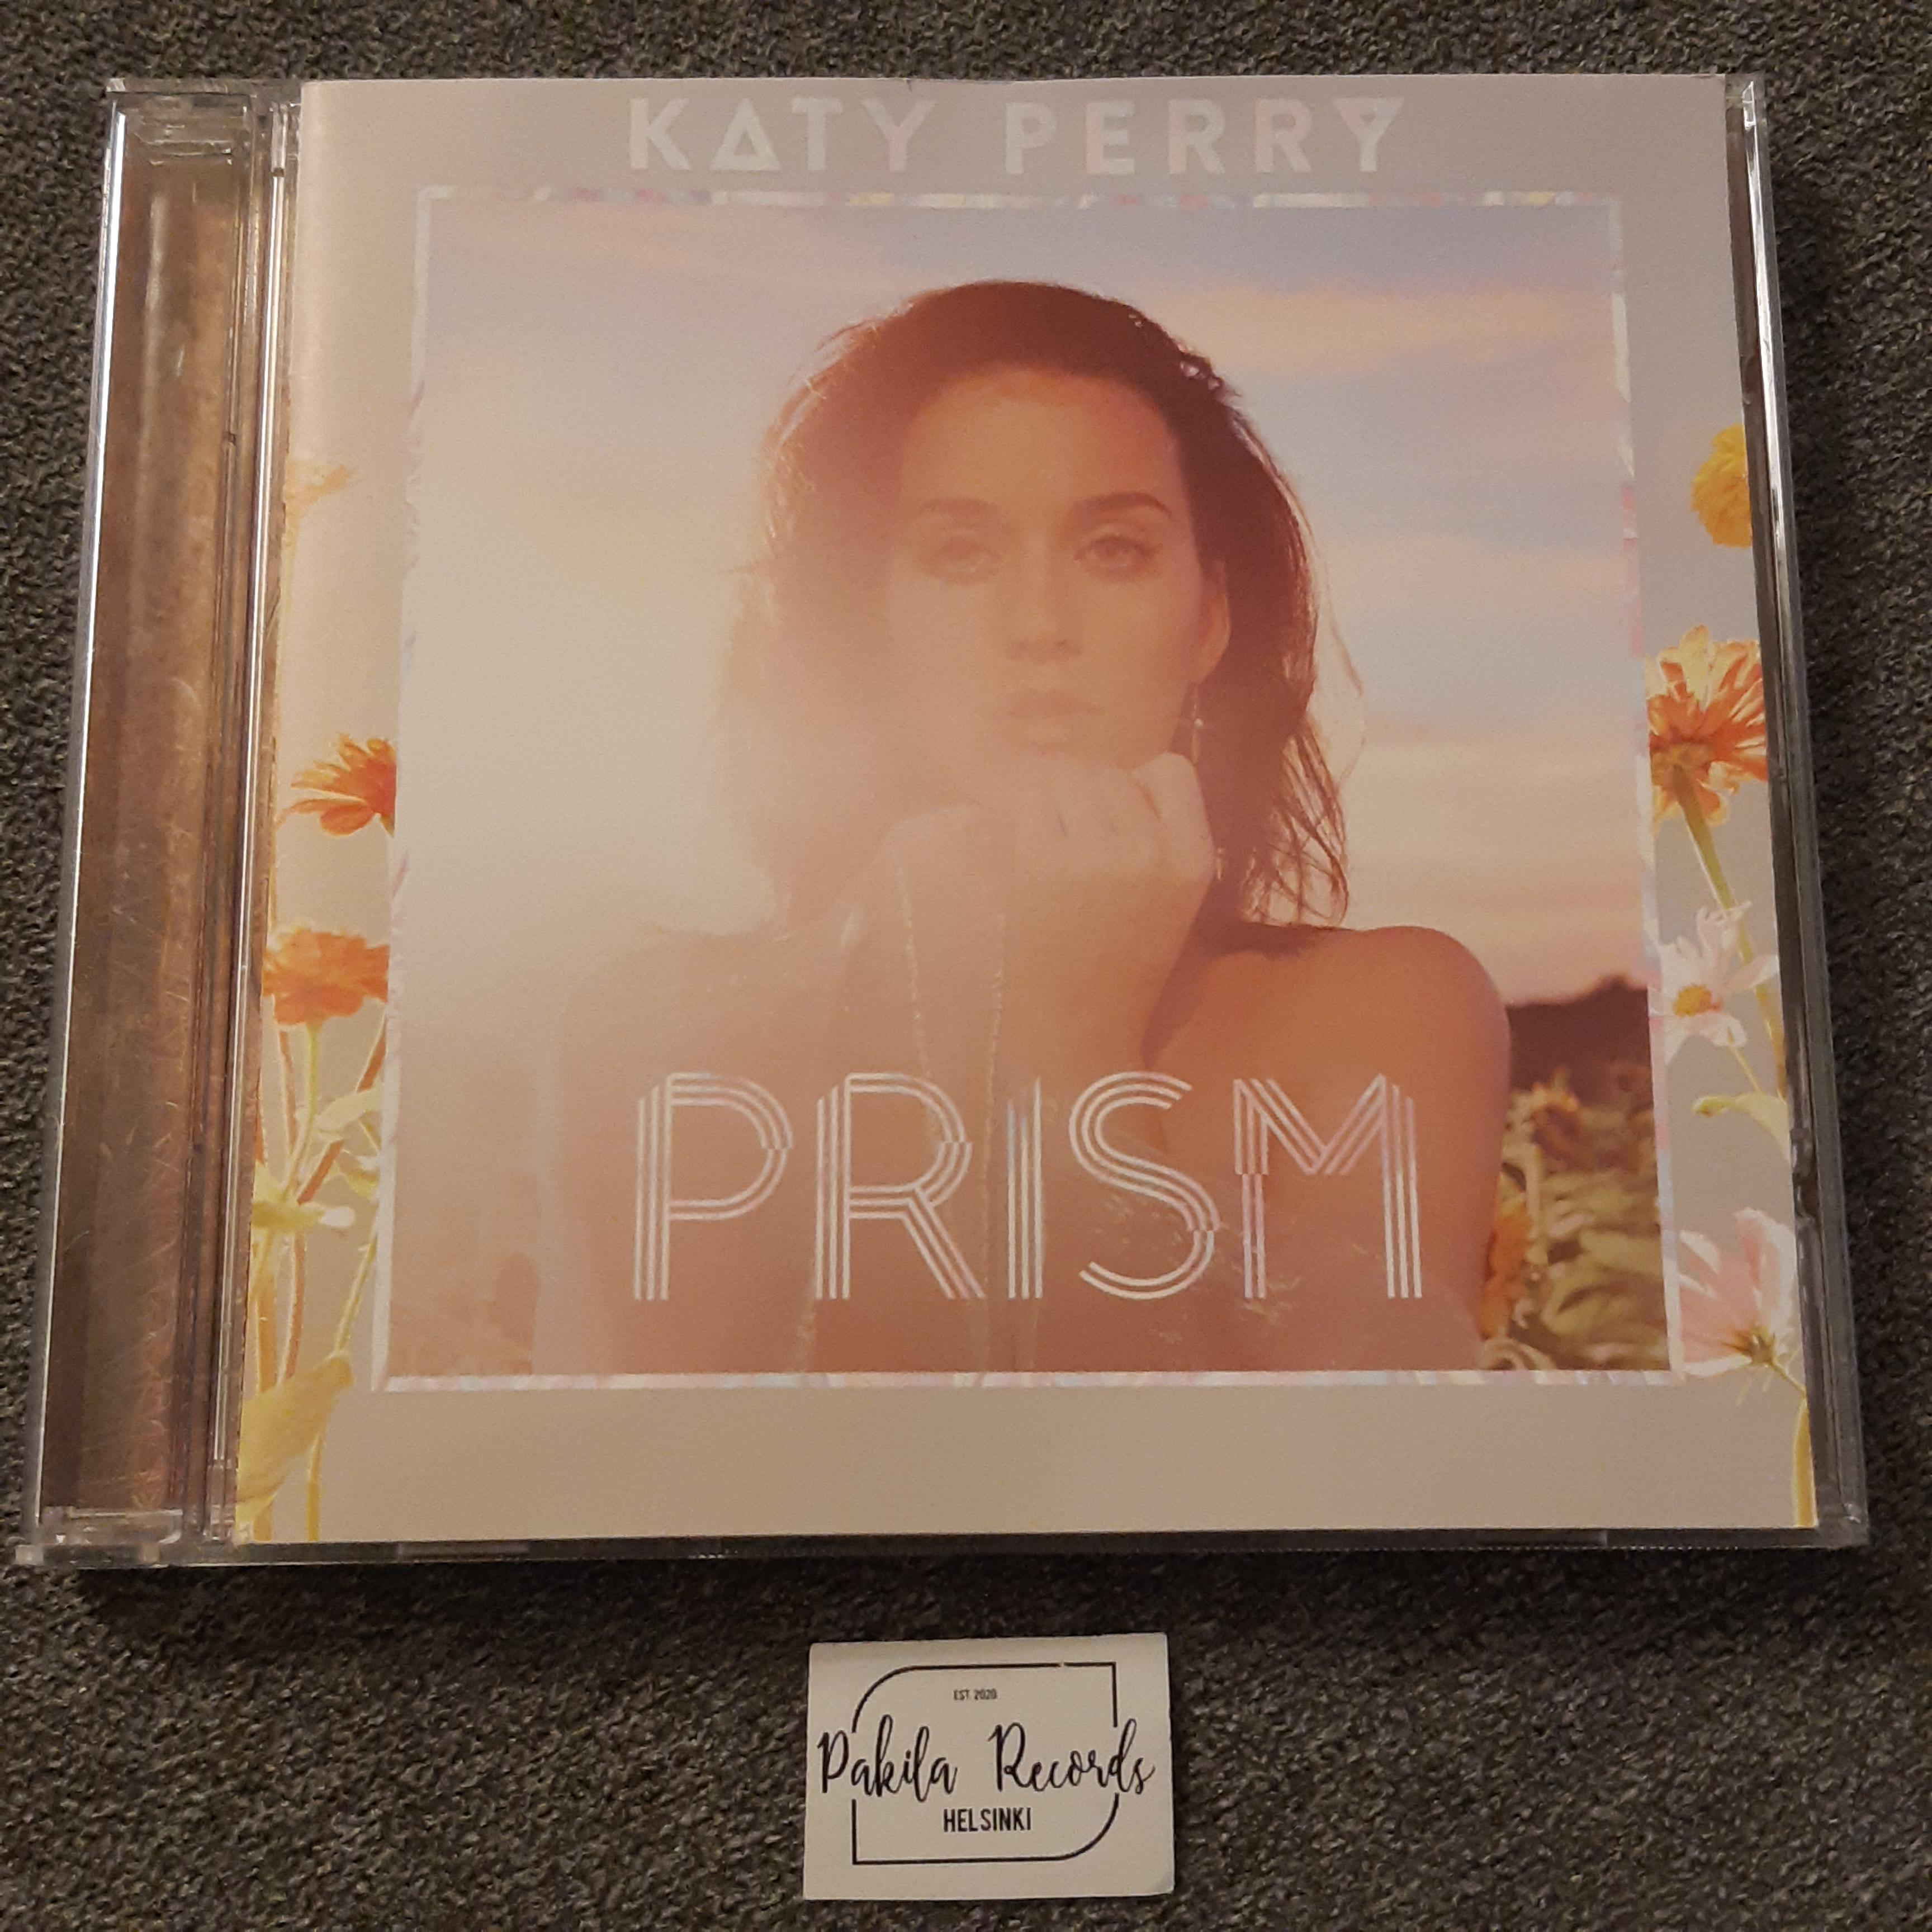 Katy Perry - Prism - CD (käytetty)